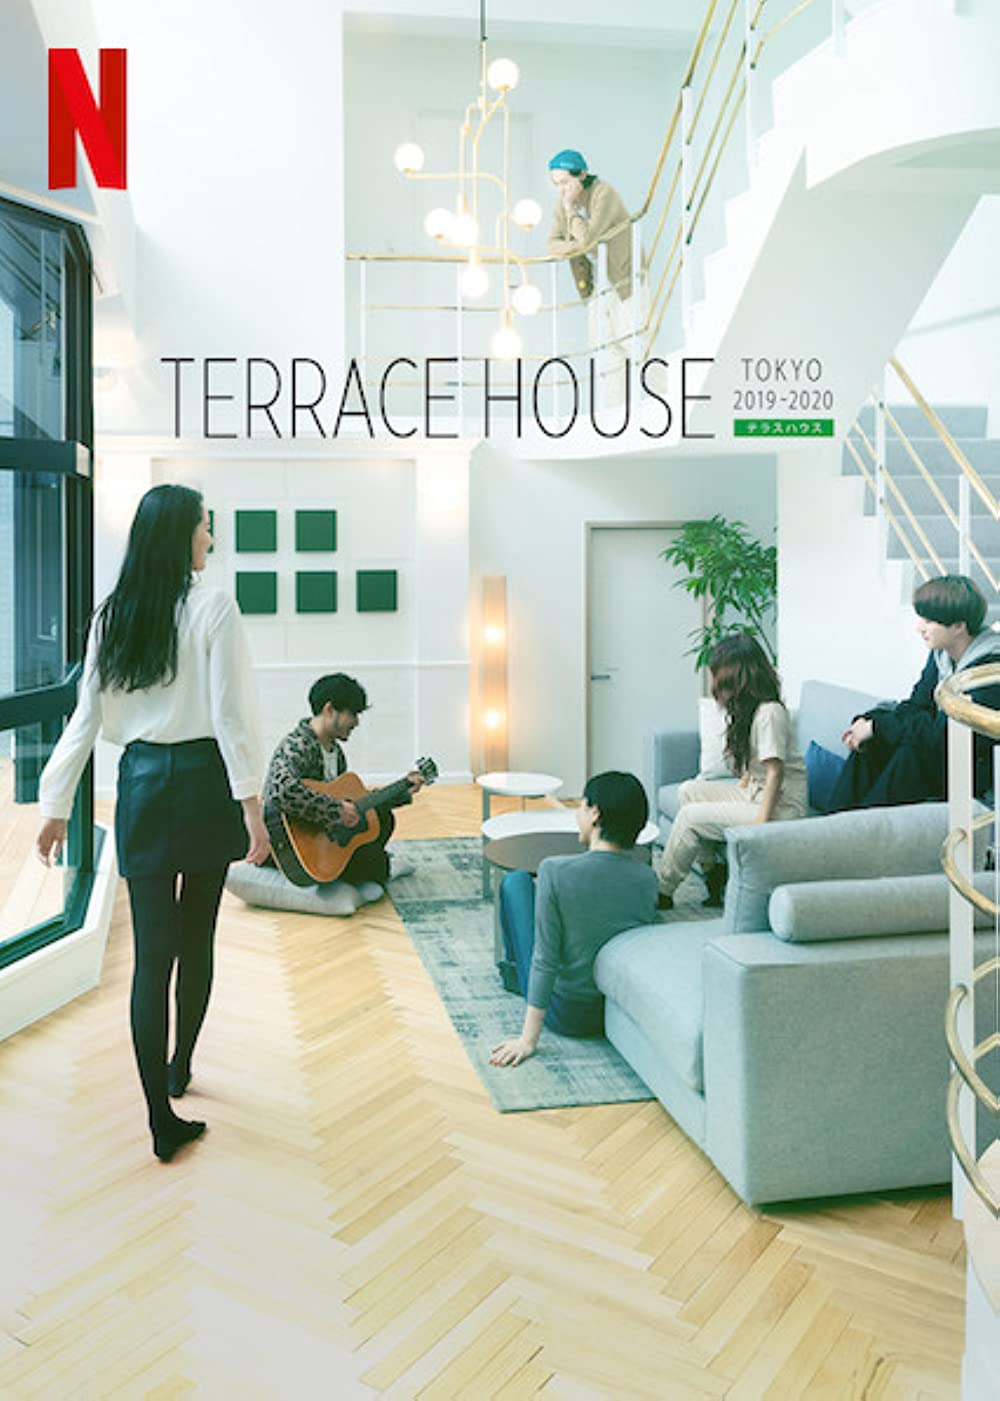 Filmbeschreibung zu Terrace House: Tokio 2019-2020: Teil 3